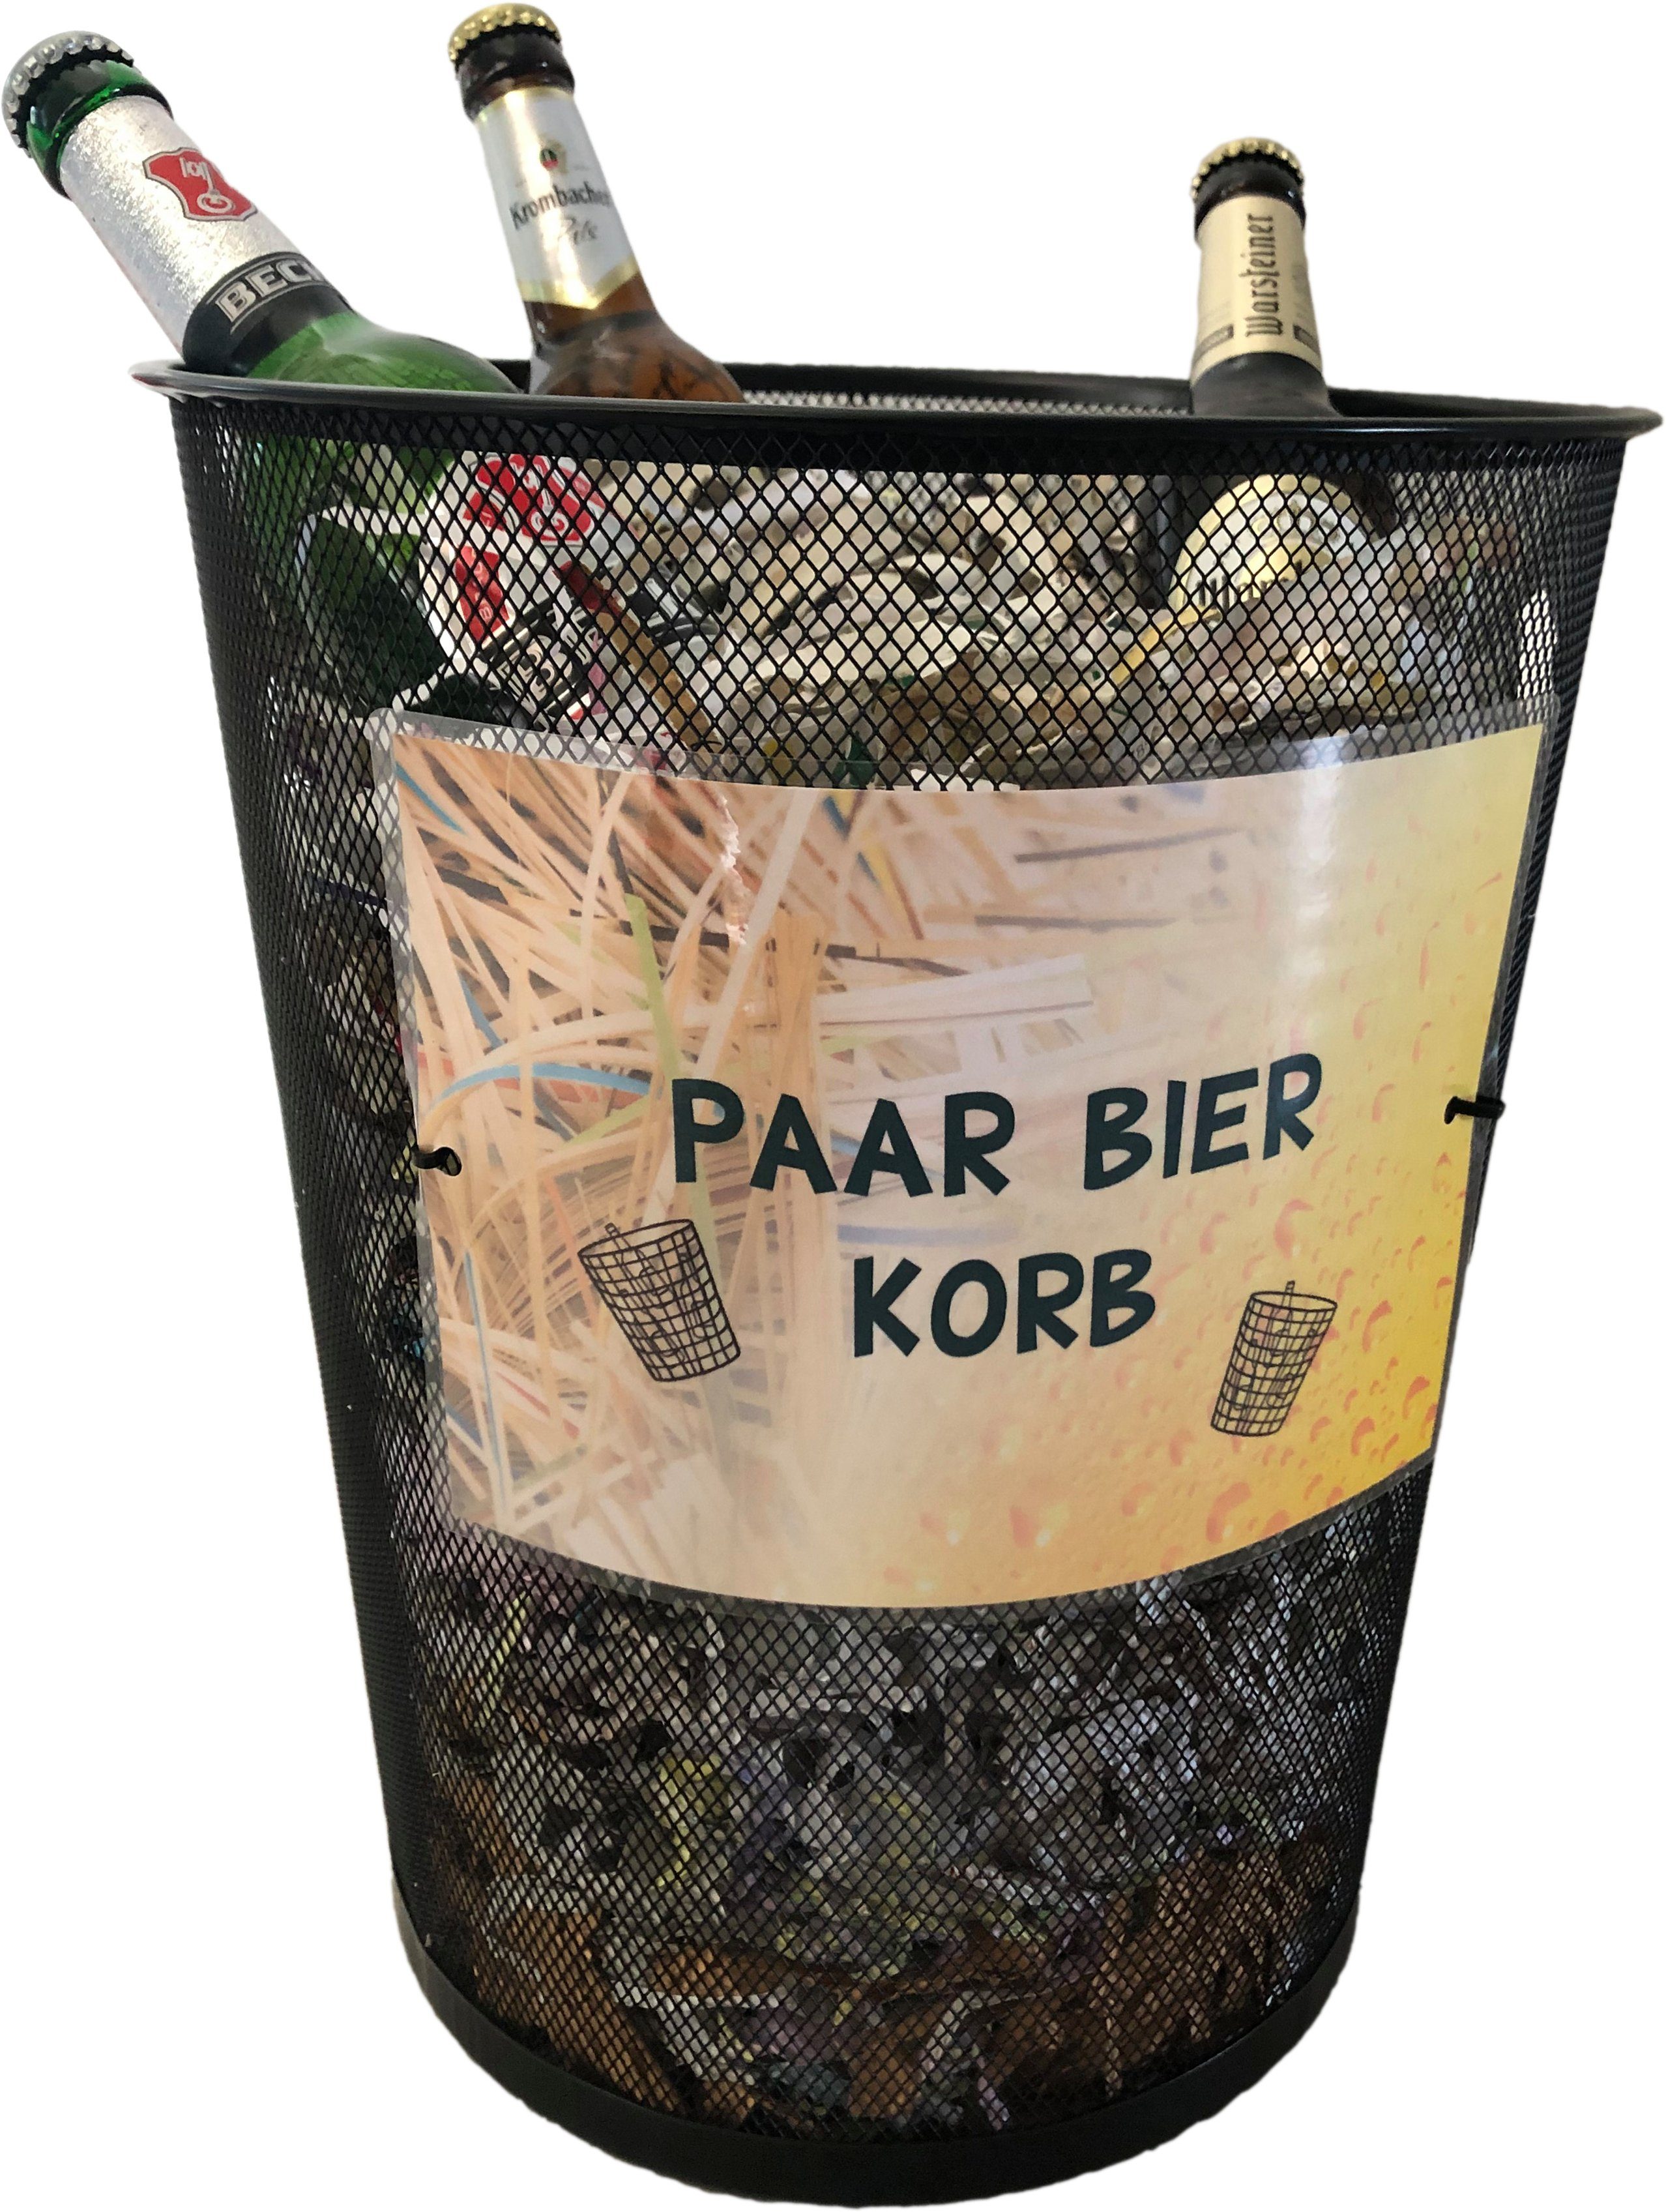 Deggelbam Papierkorb Paar Bier Korb / Witzige Geschenkidee, Ein Hingucker auf jeder Geburtstagsparty!